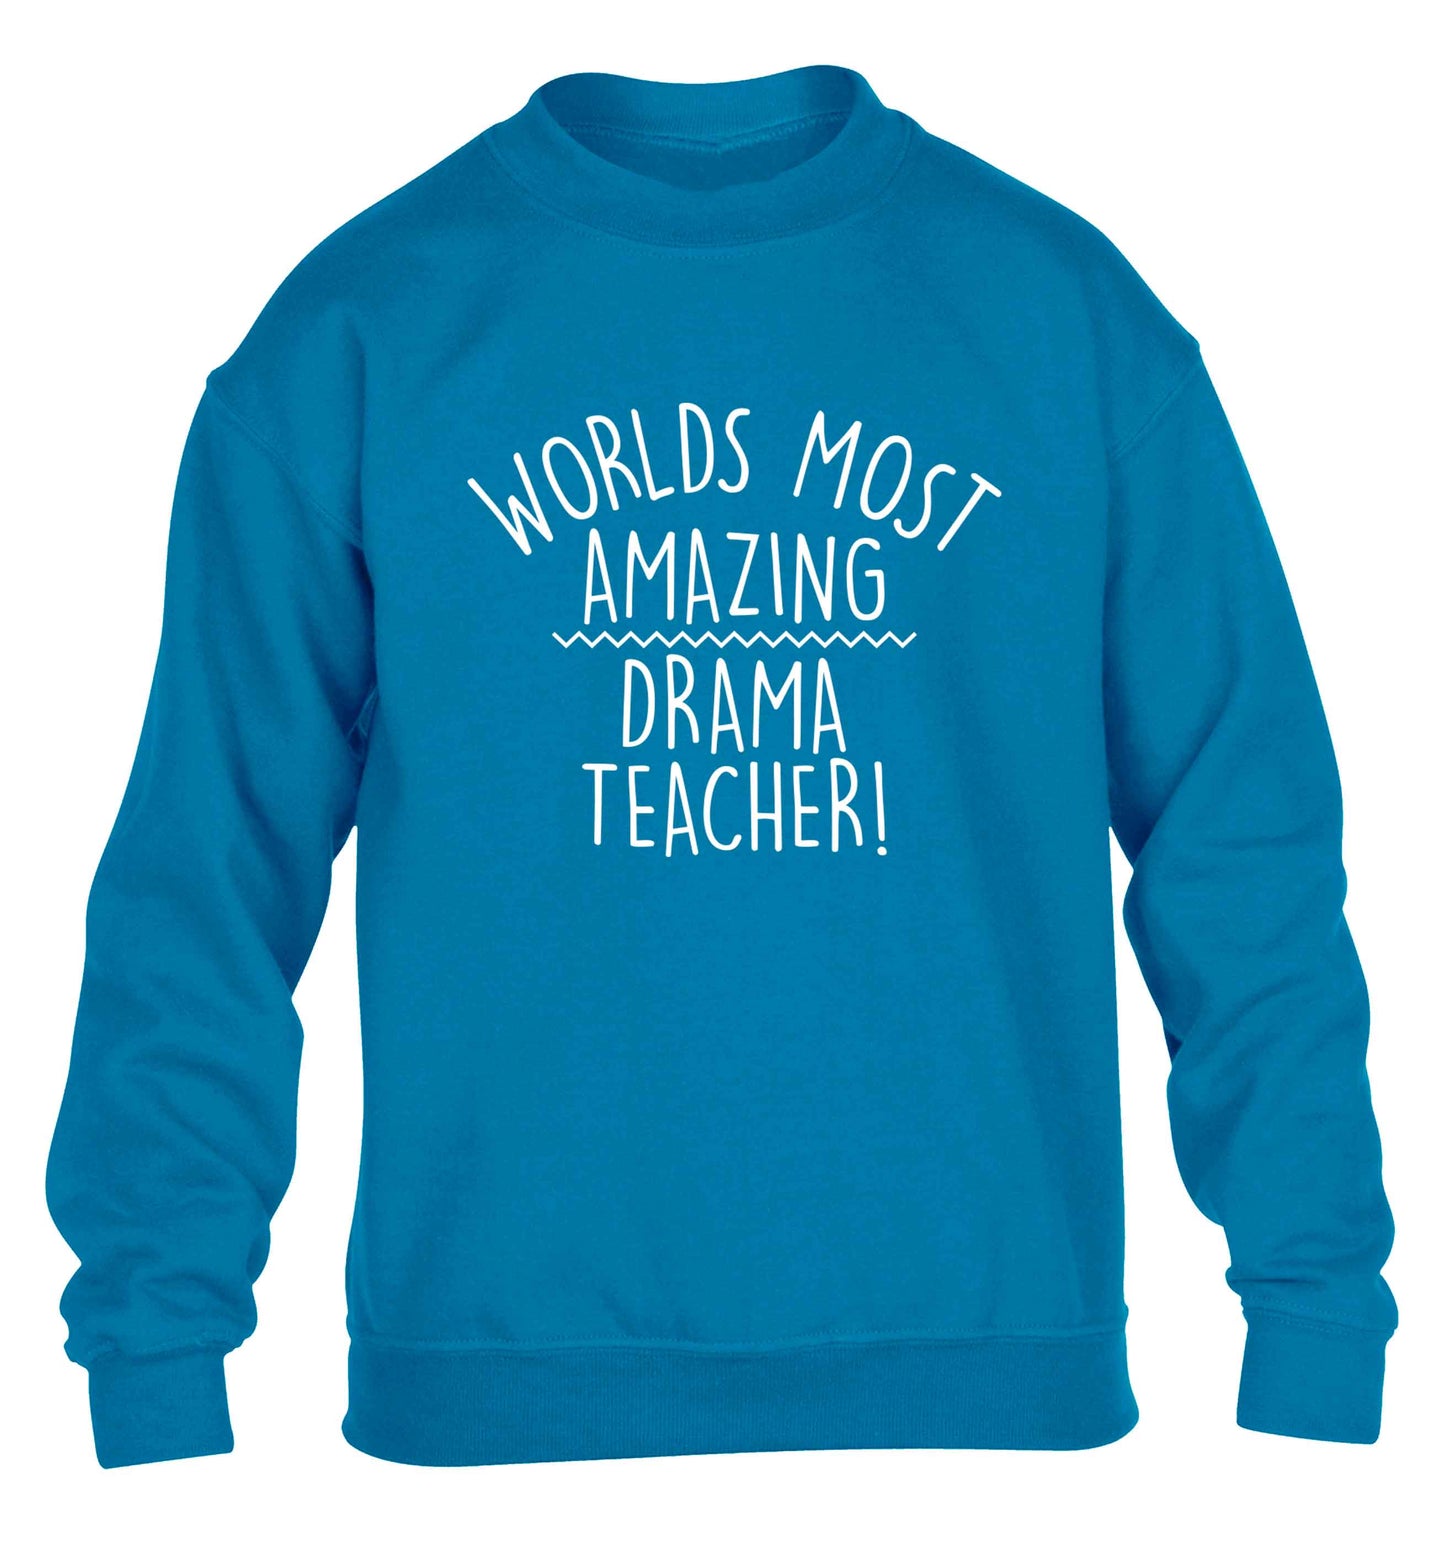 Worlds most amazing drama teacher children's blue sweater 12-13 Years